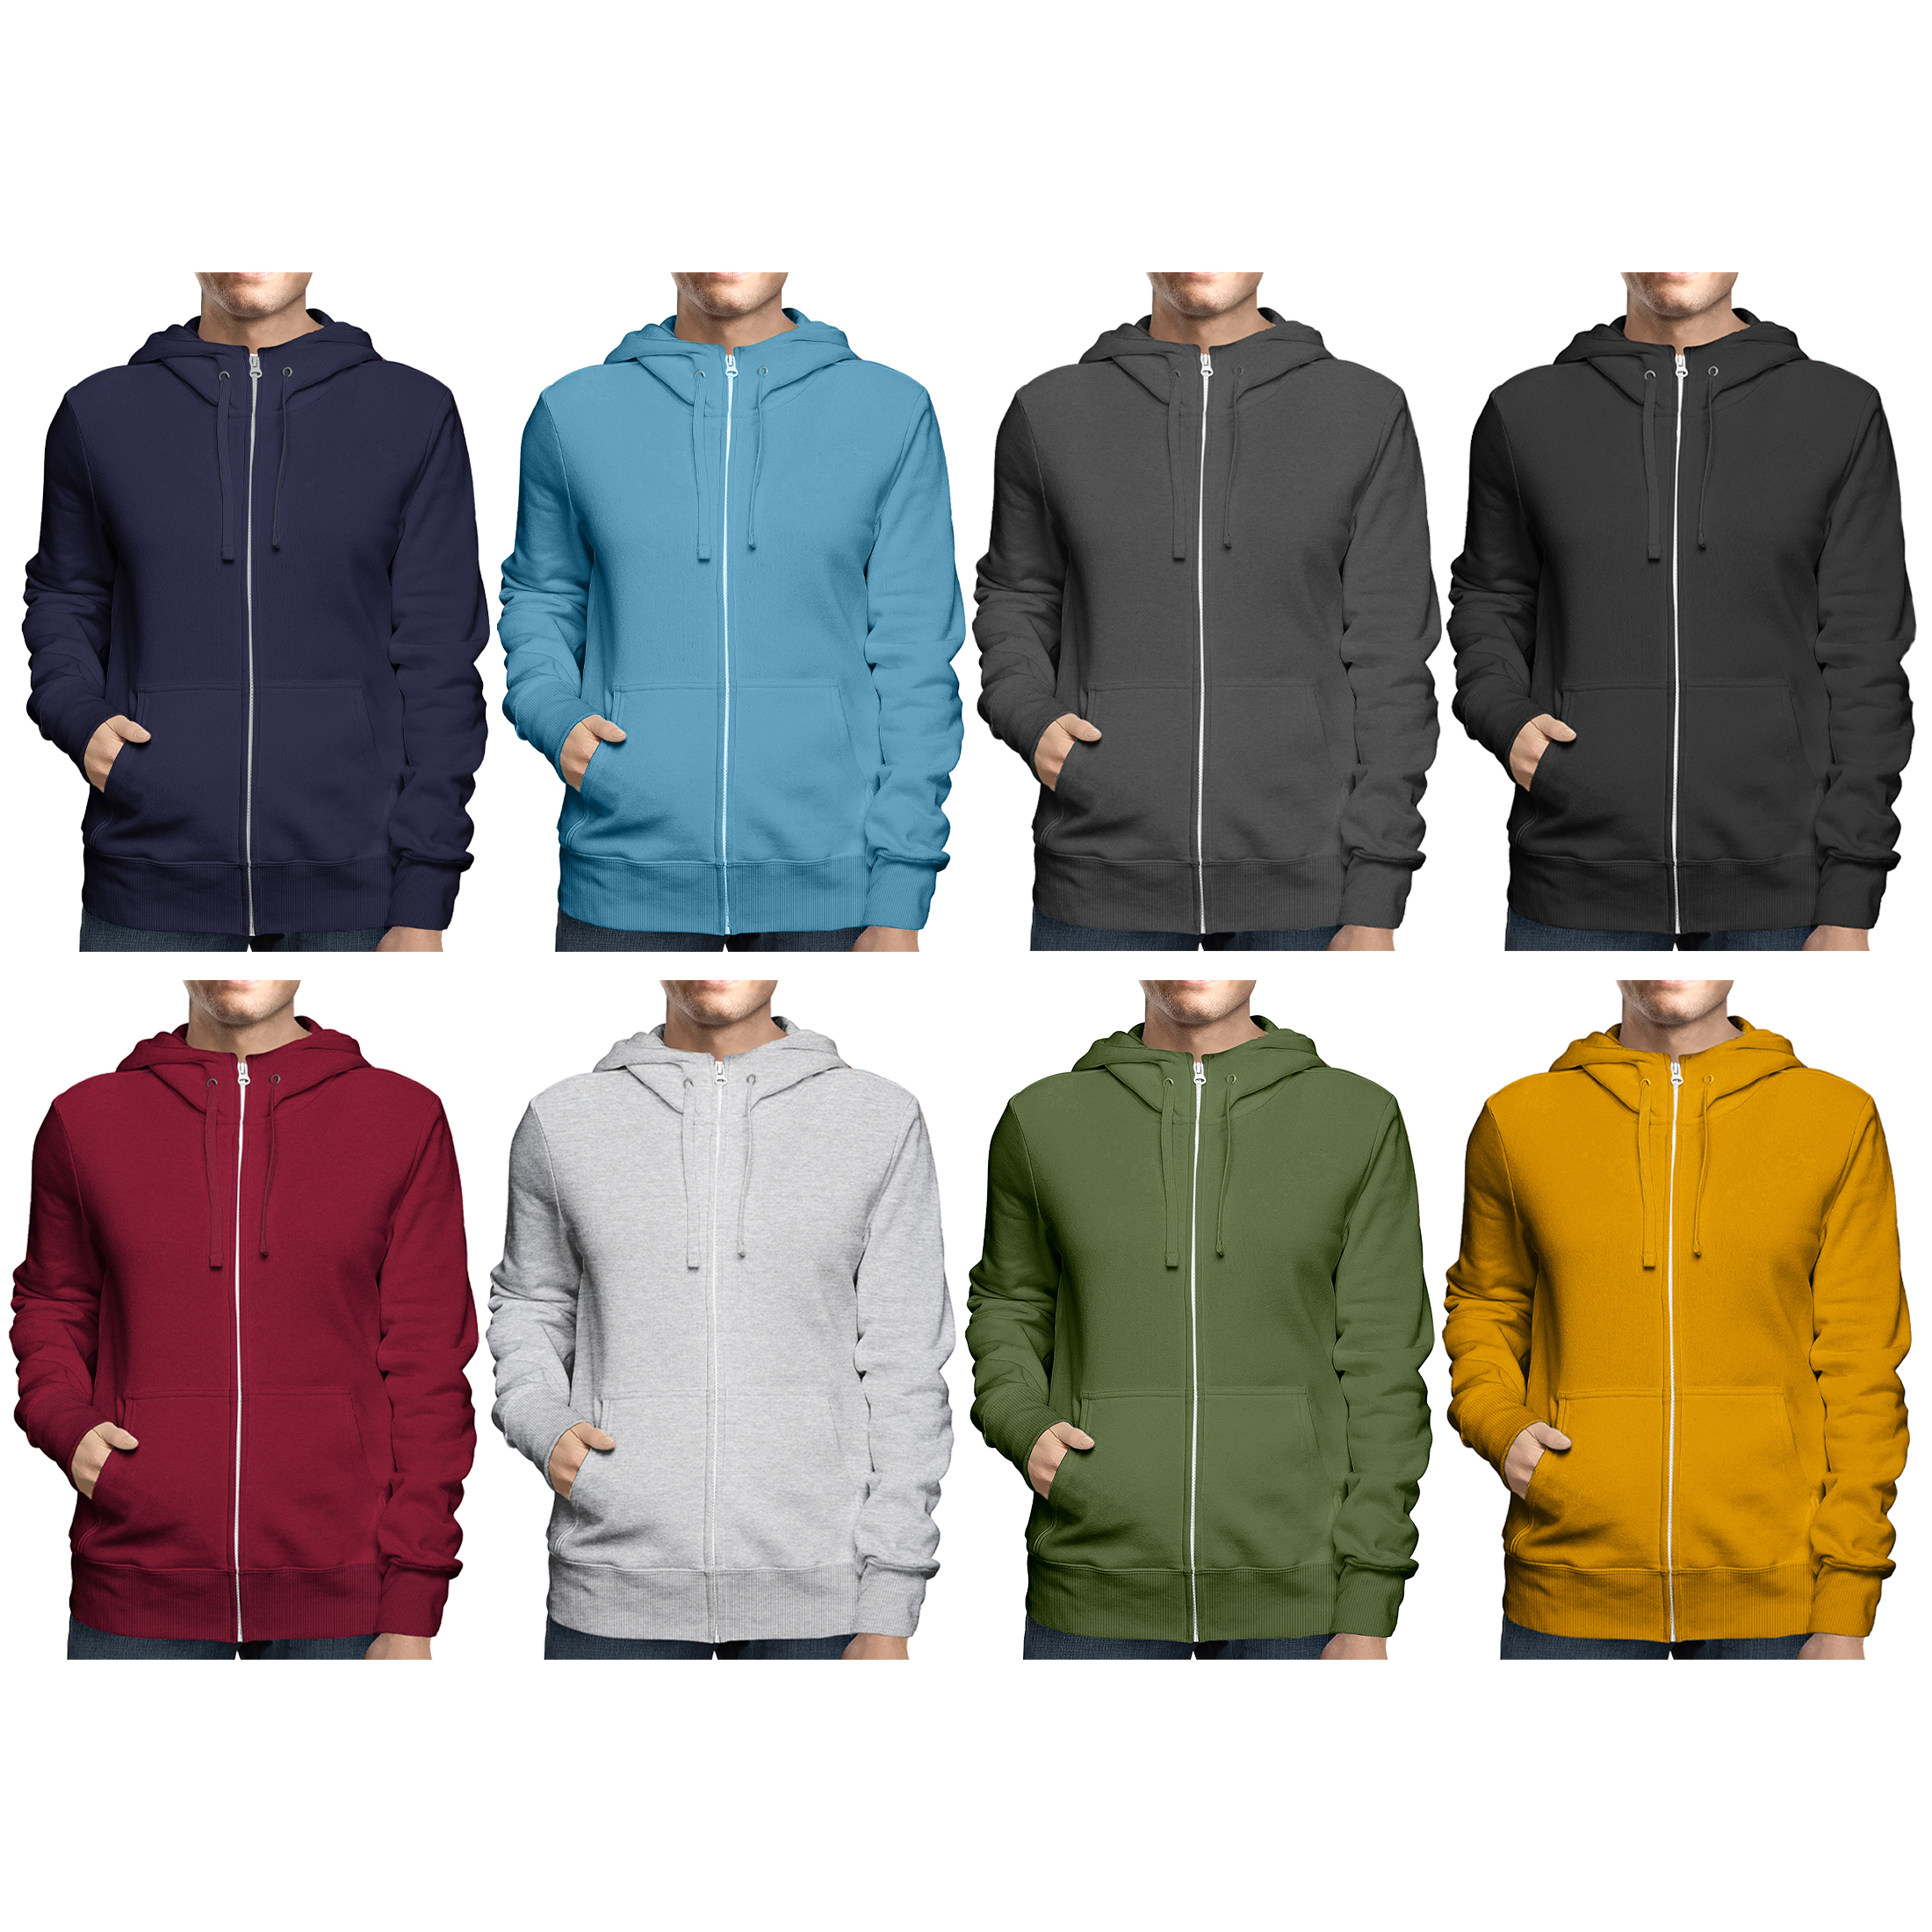 2-Pack: Men's Full Zip Up Fleece-Lined Hoodie Sweatshirt (Big & Tall Size Available) - Navy & Gray, Medium